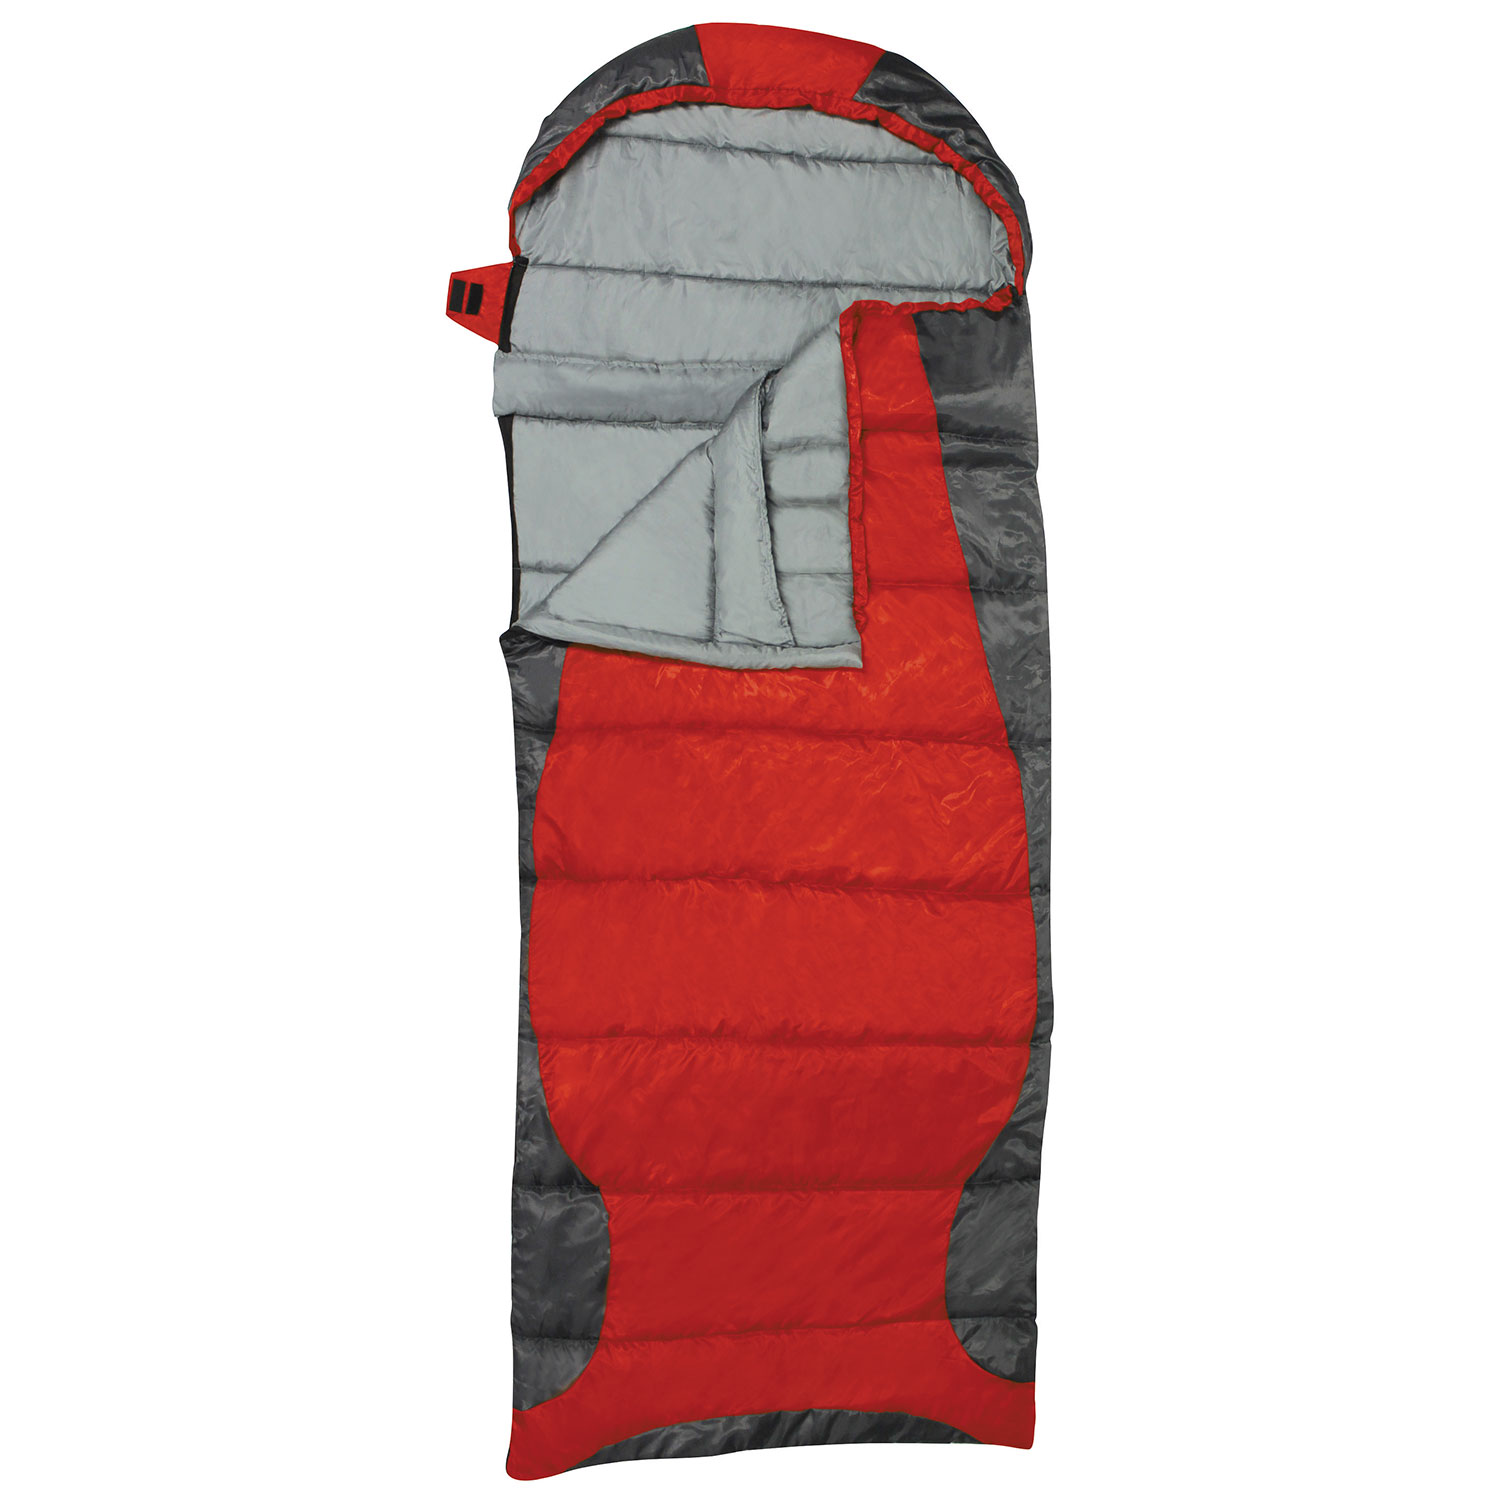 Rockwater Designs Rectangular Heat Zone Sleeping Bag (-20-Degrees Celcius) - Orange/Dark Grey